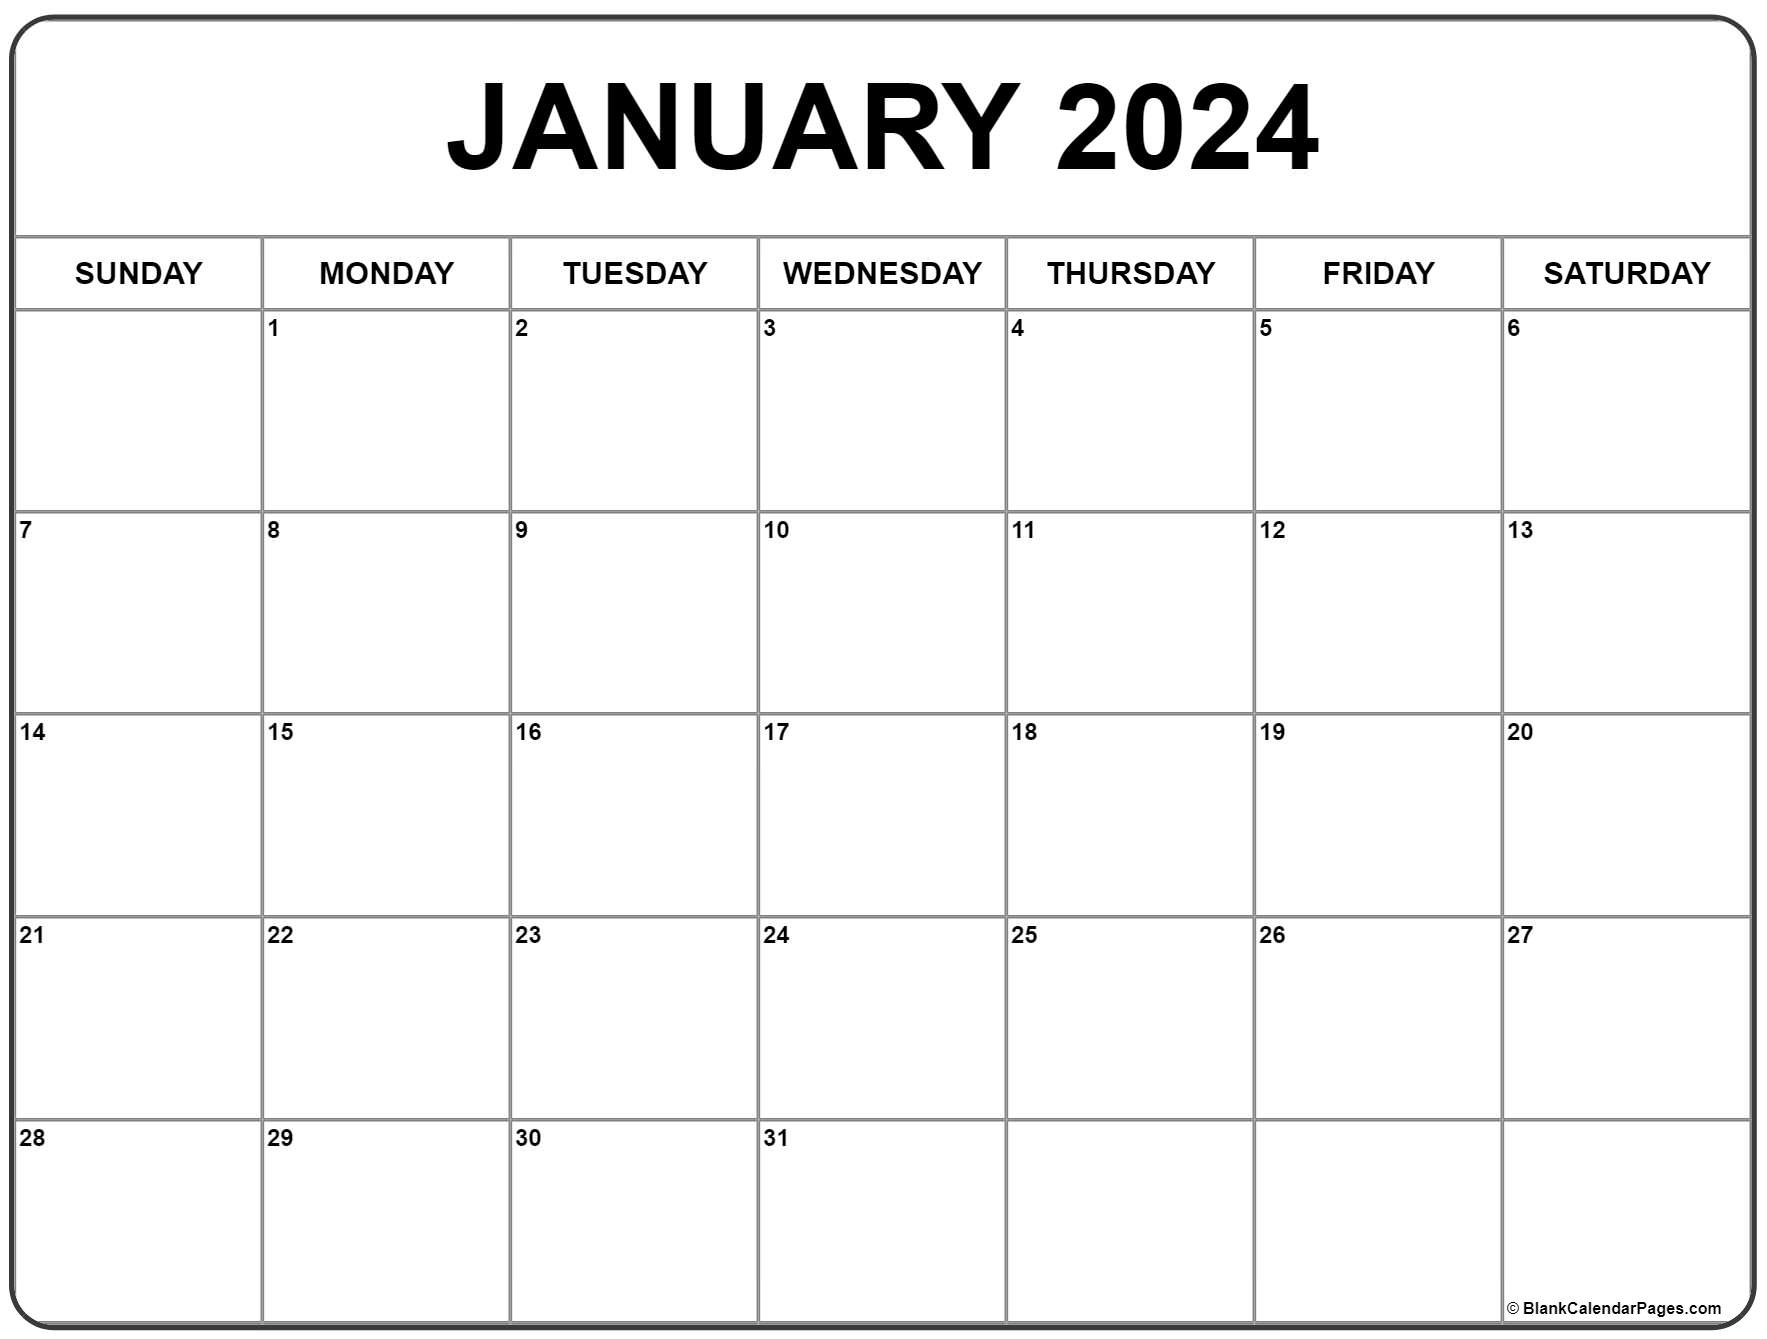 January 2024 Calendar | Free Printable Calendar for 2024 Monthly Printable Calendar